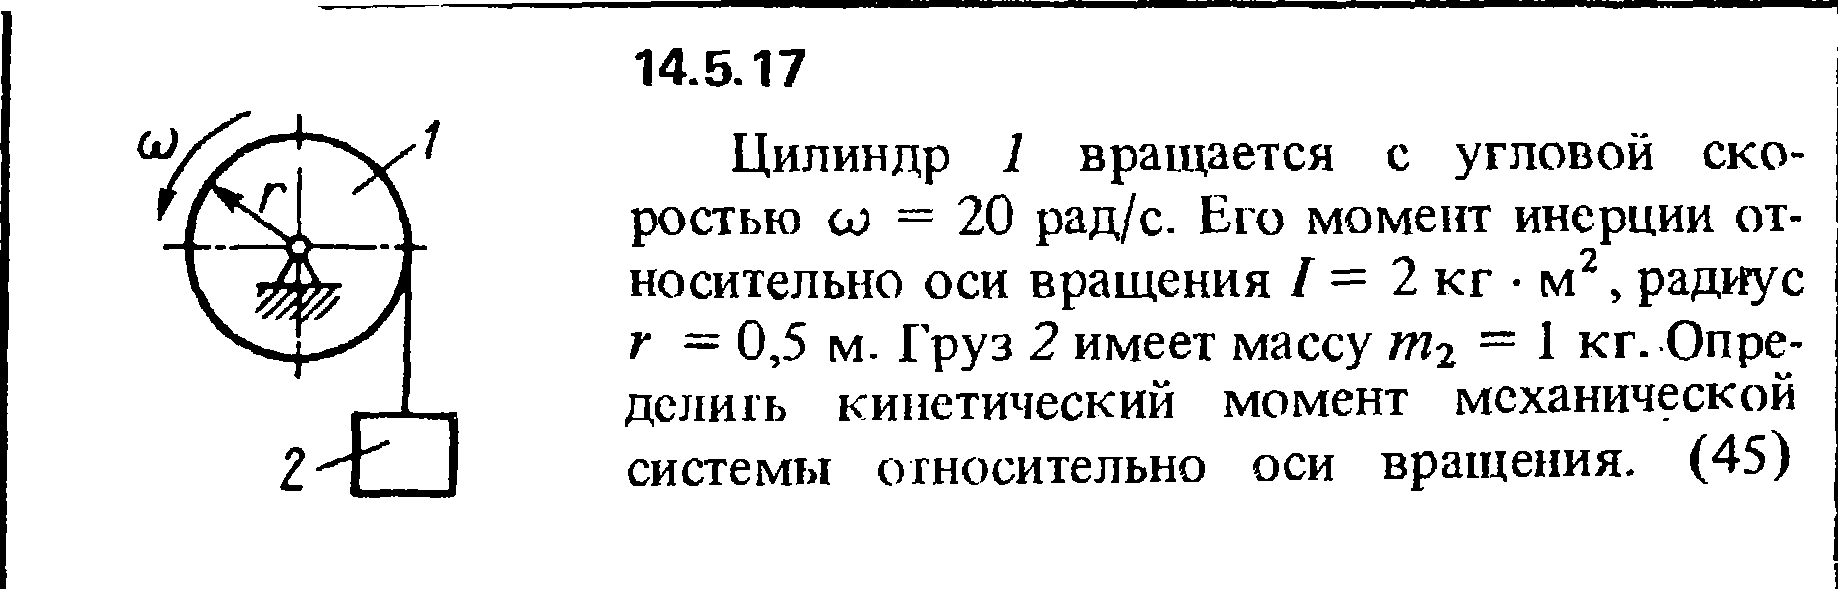 Решение задачи 14.5.17 из сборника Кепе О.Е. 1989 года